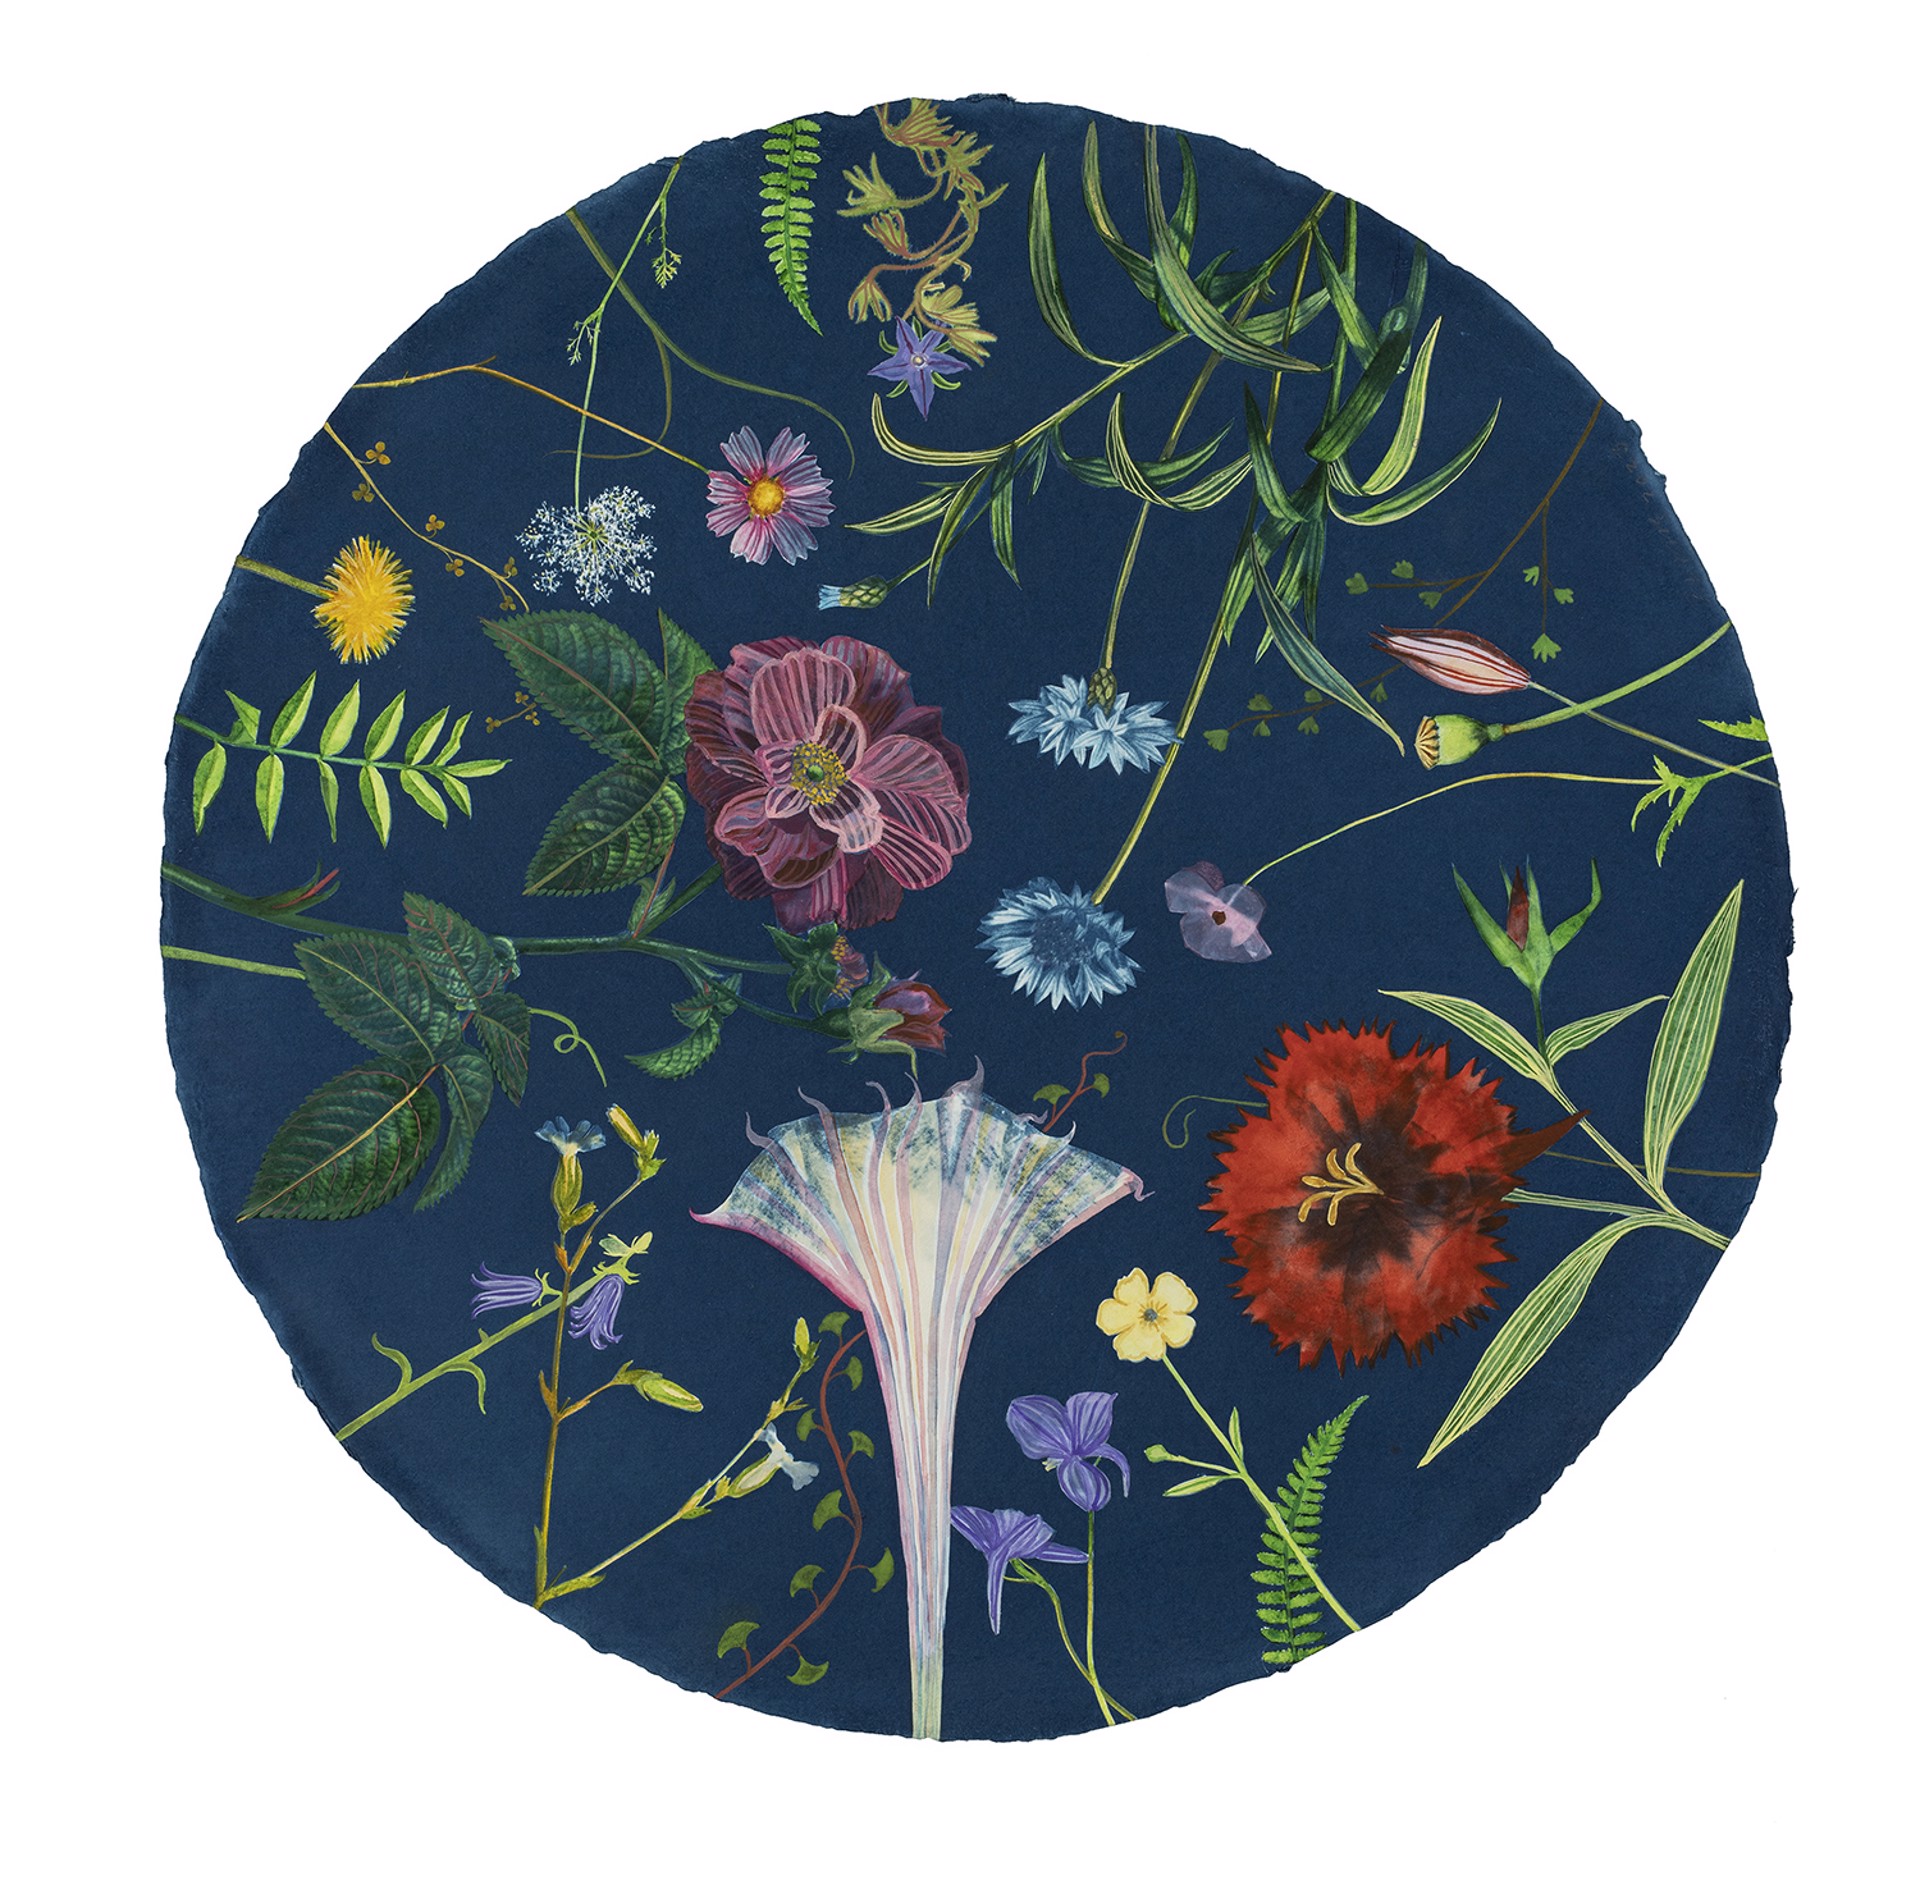 Picturesque Botany (Tondo/Rose, Cornflower, Queen Anne’s Lace, Moonflower, Delphinium, Vines, etc.) by Julia Whitney Barnes